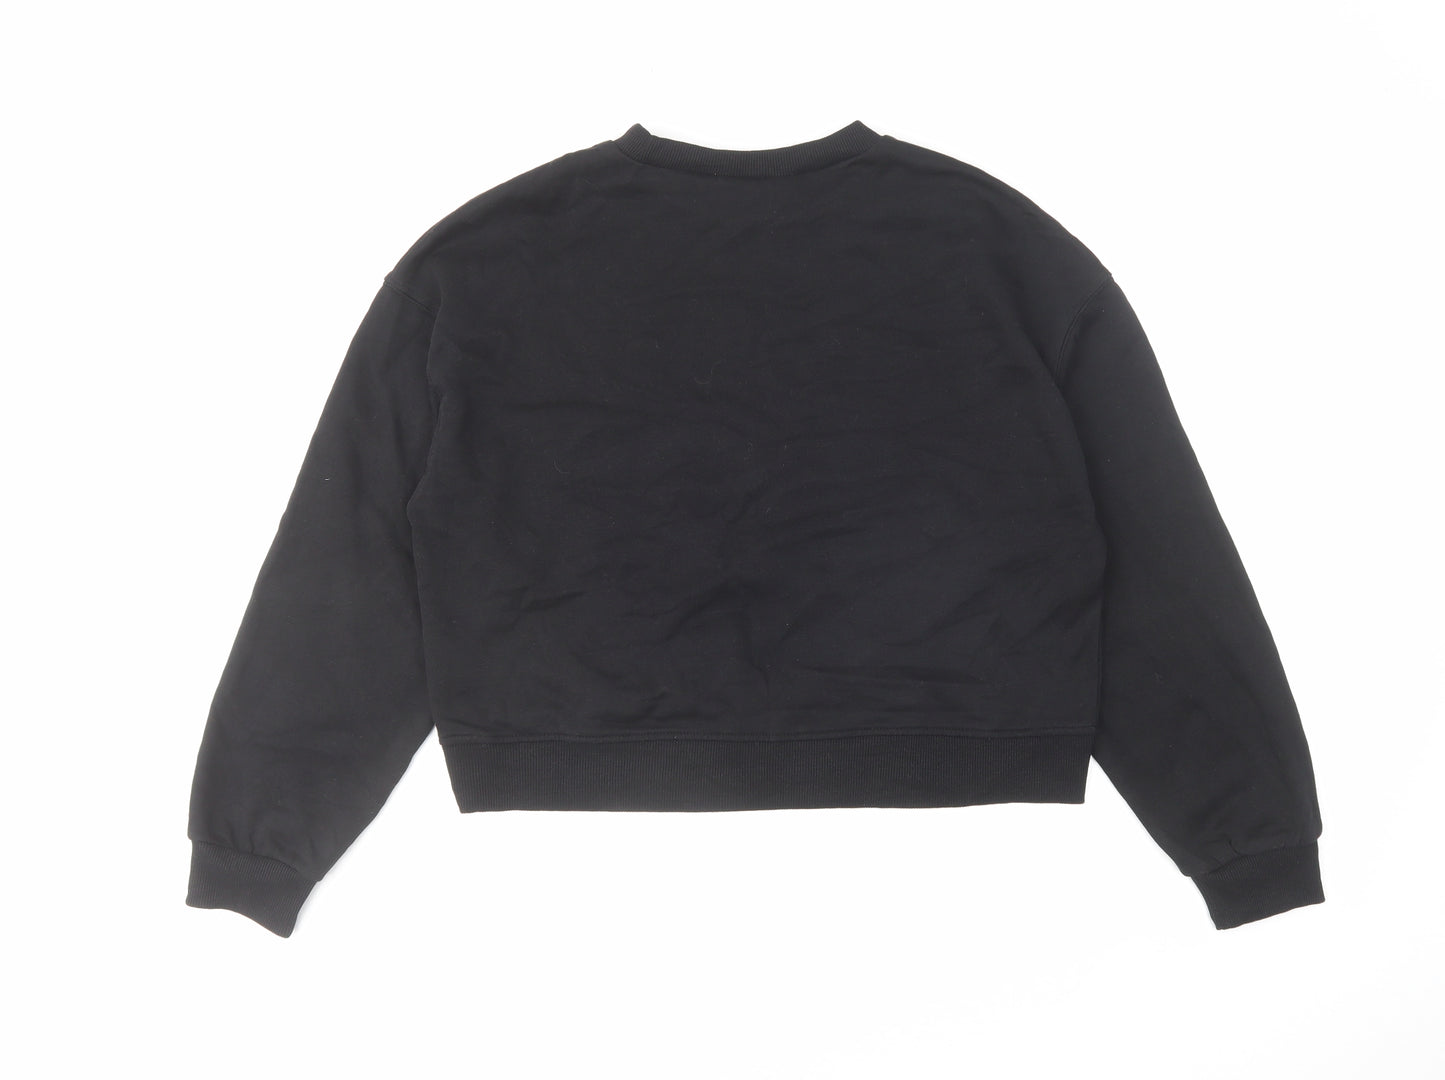 H&M Womens Black Cotton Pullover Sweatshirt Size S Pullover